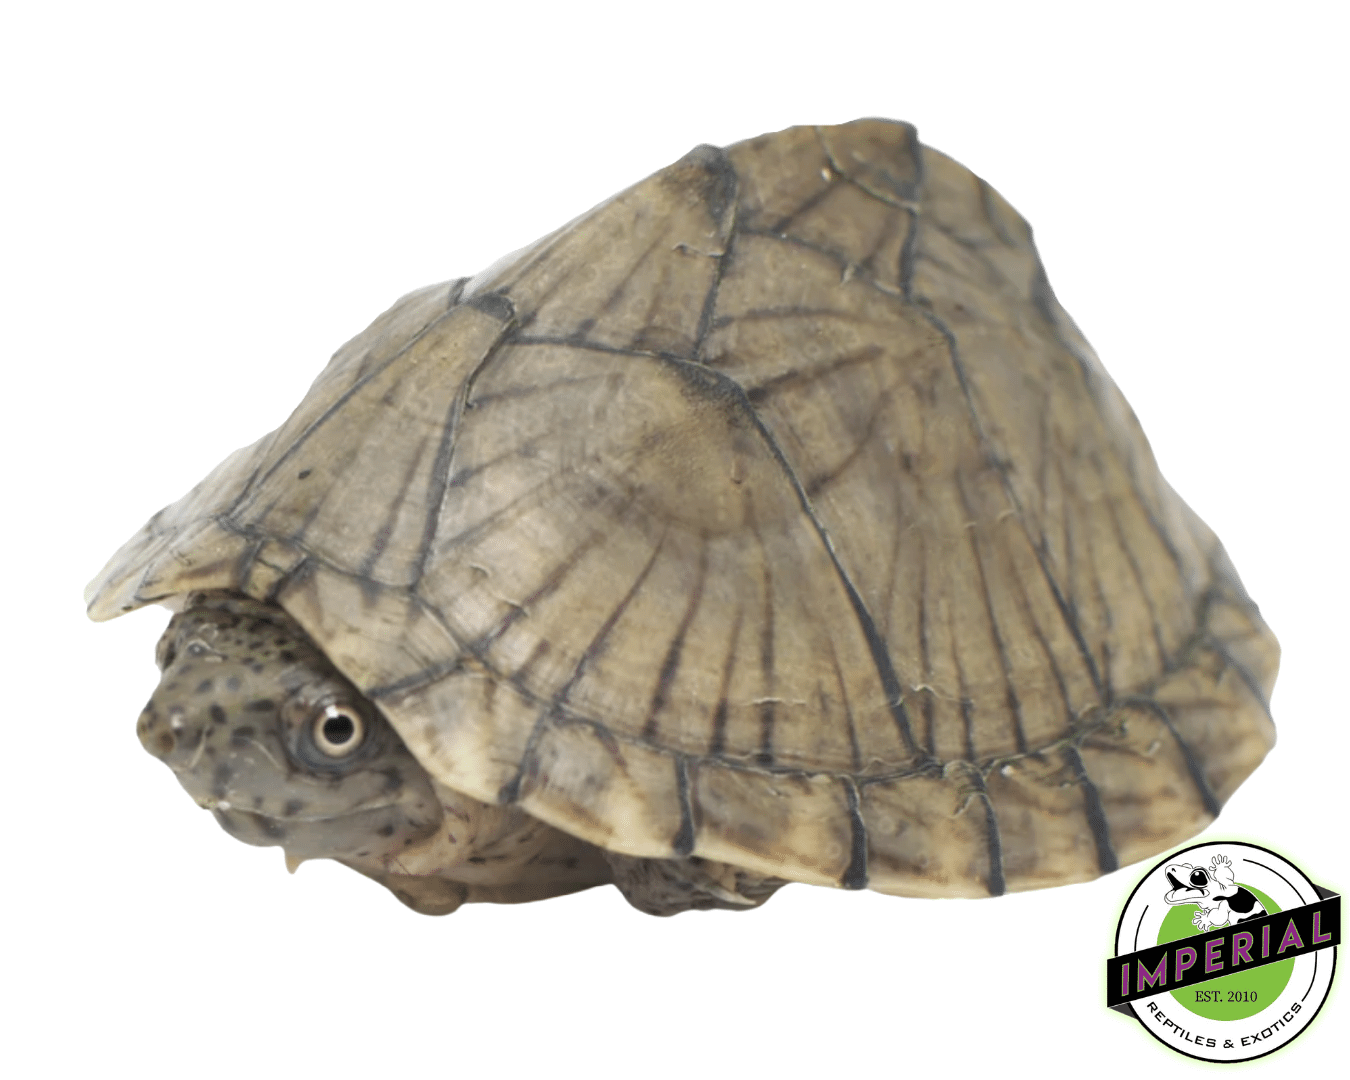 razorback musk turtle for sale, buy reptiles online